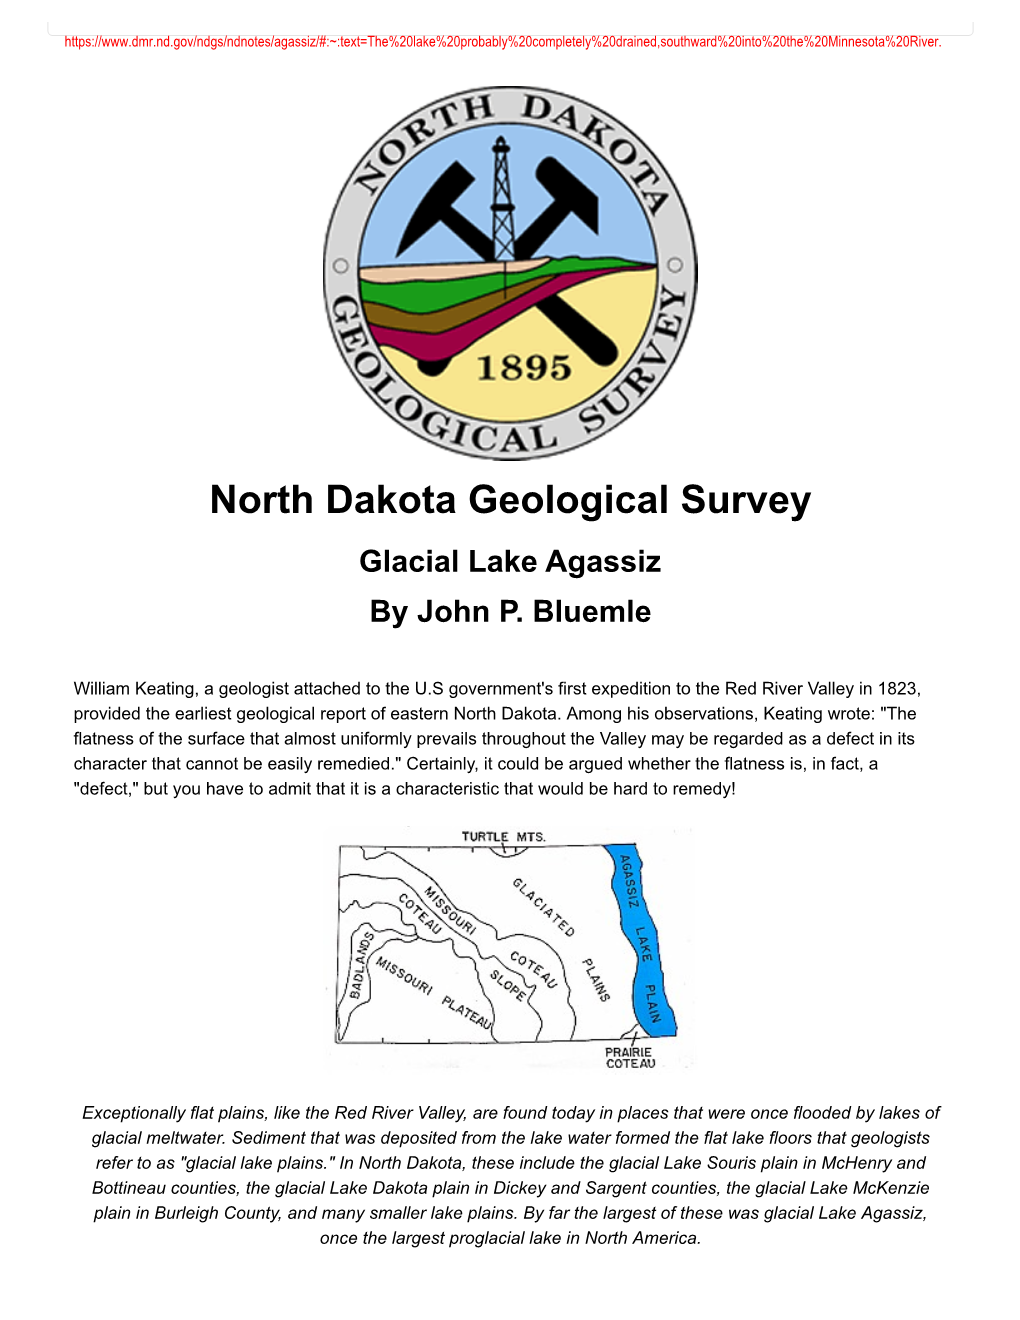 North Dakota Geological Survey Glacial Lake Agassiz by John P